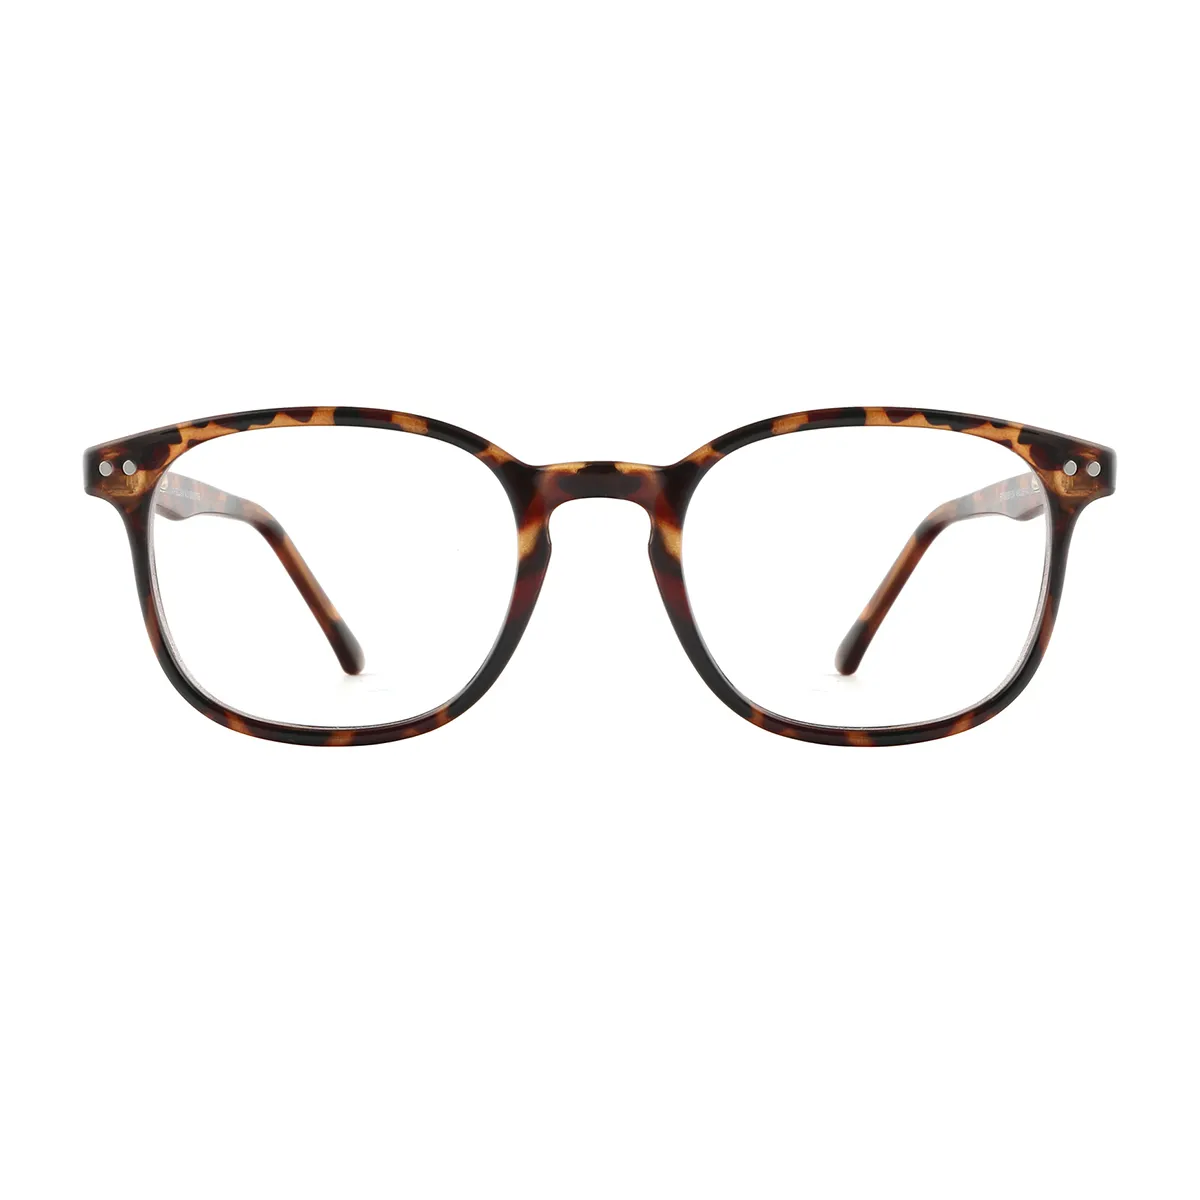 Laconia - Square Demi Reading glasses for Men & Women